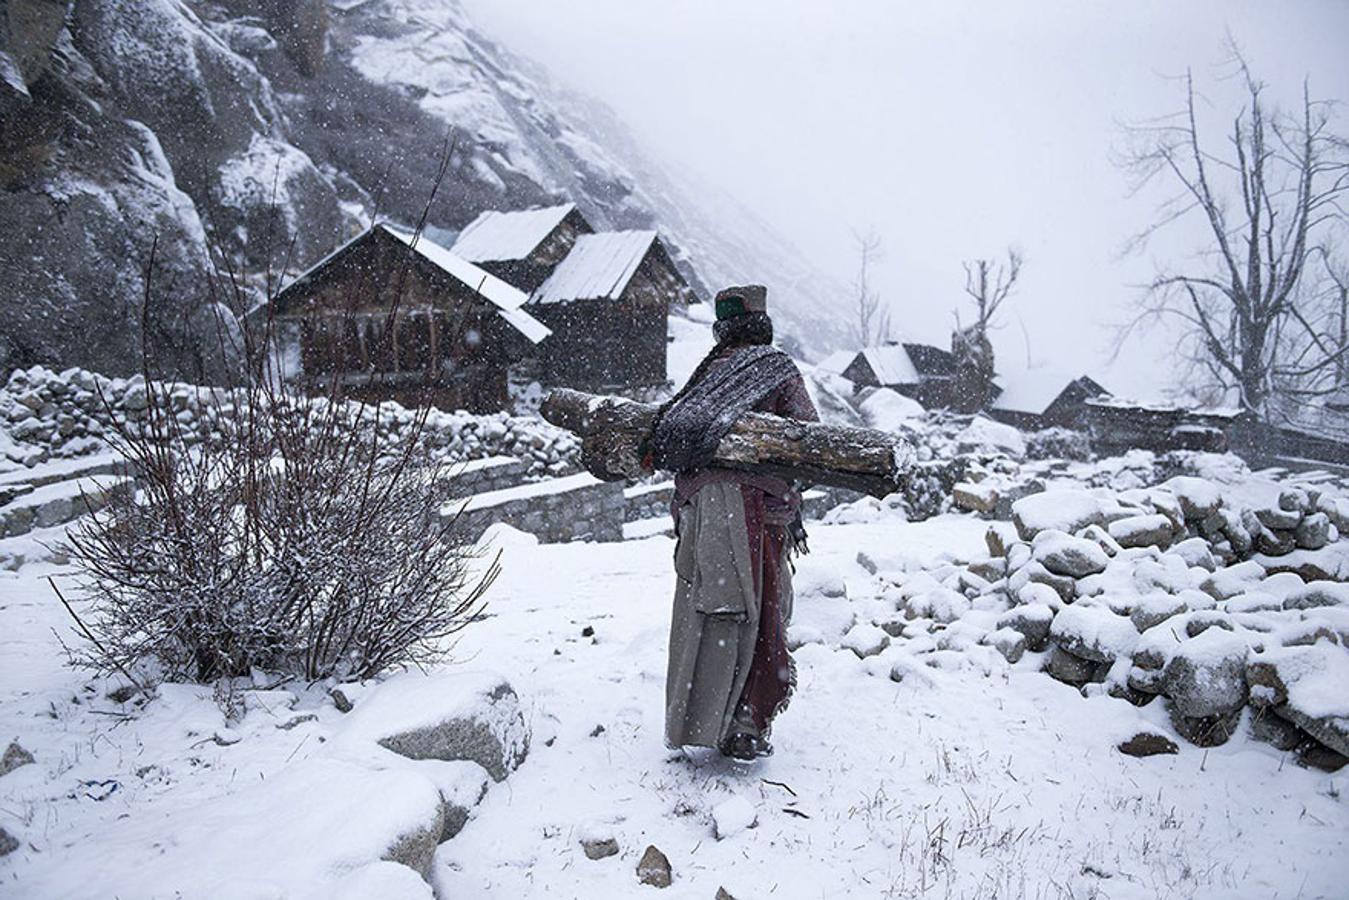 Remote life at -21 degrees, Himachal Pradesh, India